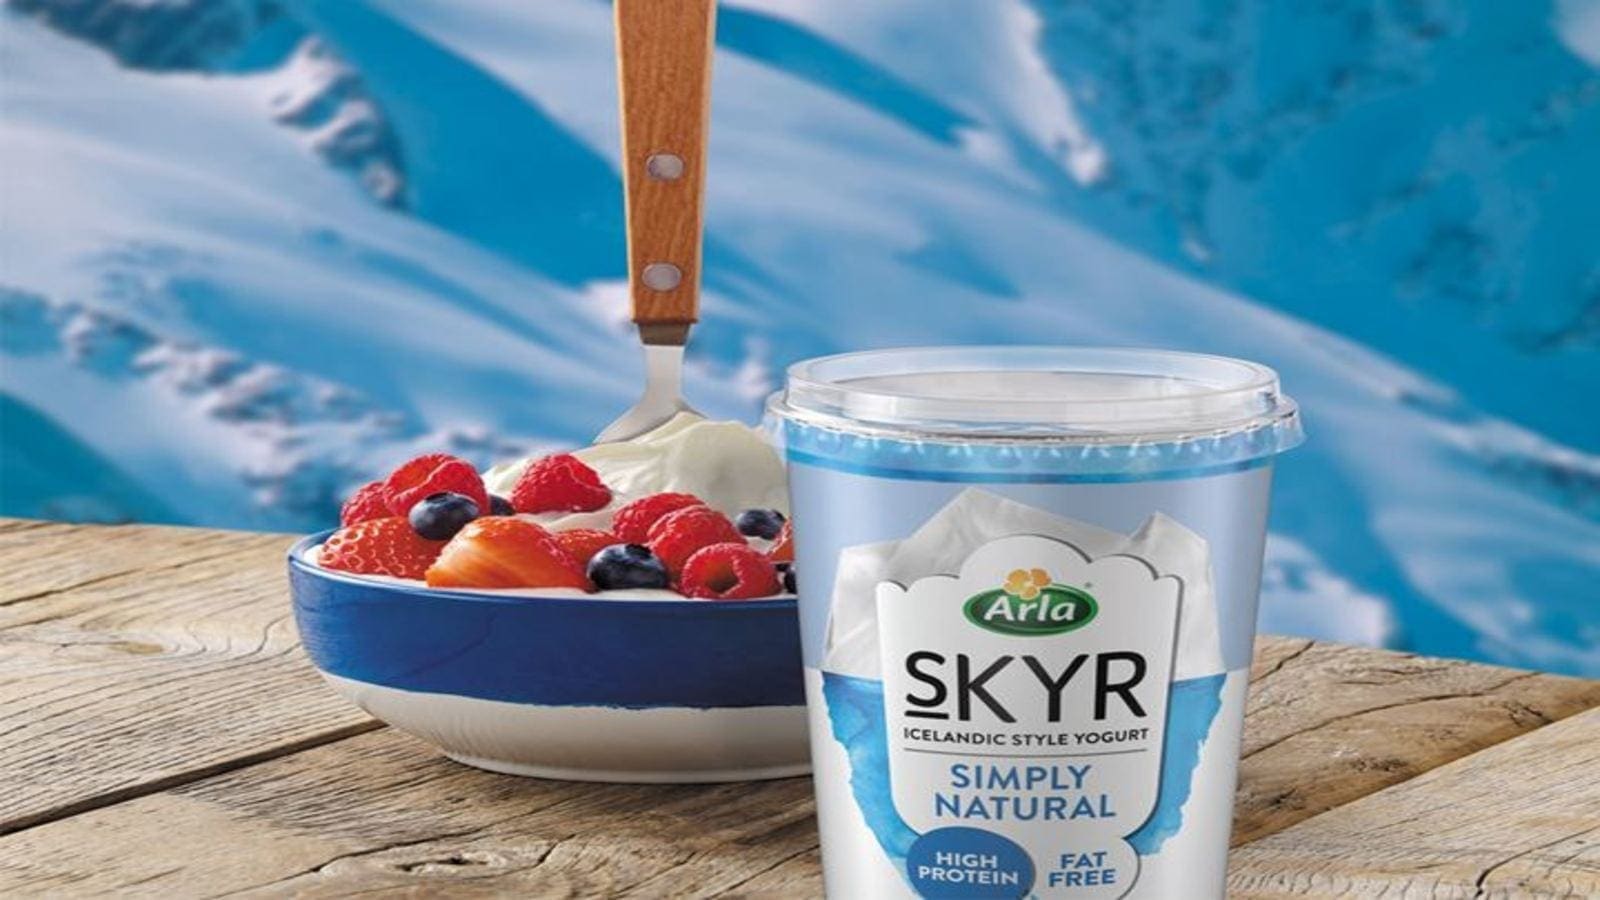 Müller launches fat-free Skyr yogurt containing 0% added sugar